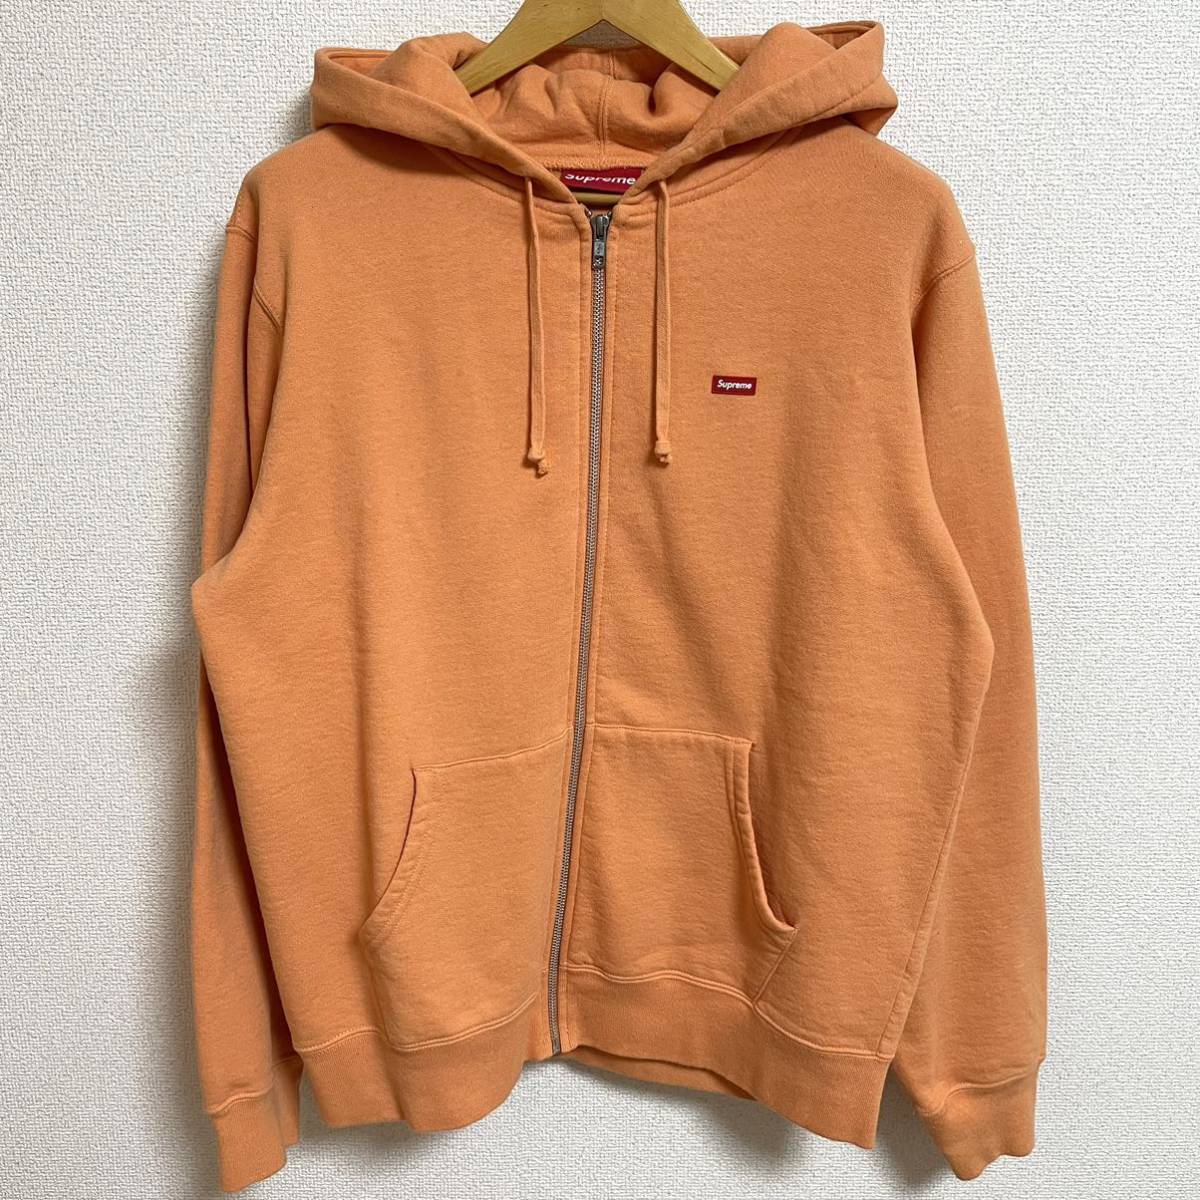 Supreme Small Box Logo Zip Up Hooded Sweatshirt Pale Orange M 19ss 2019年 オレンジ スモール ボックスロゴ ジップアップ タグ付き